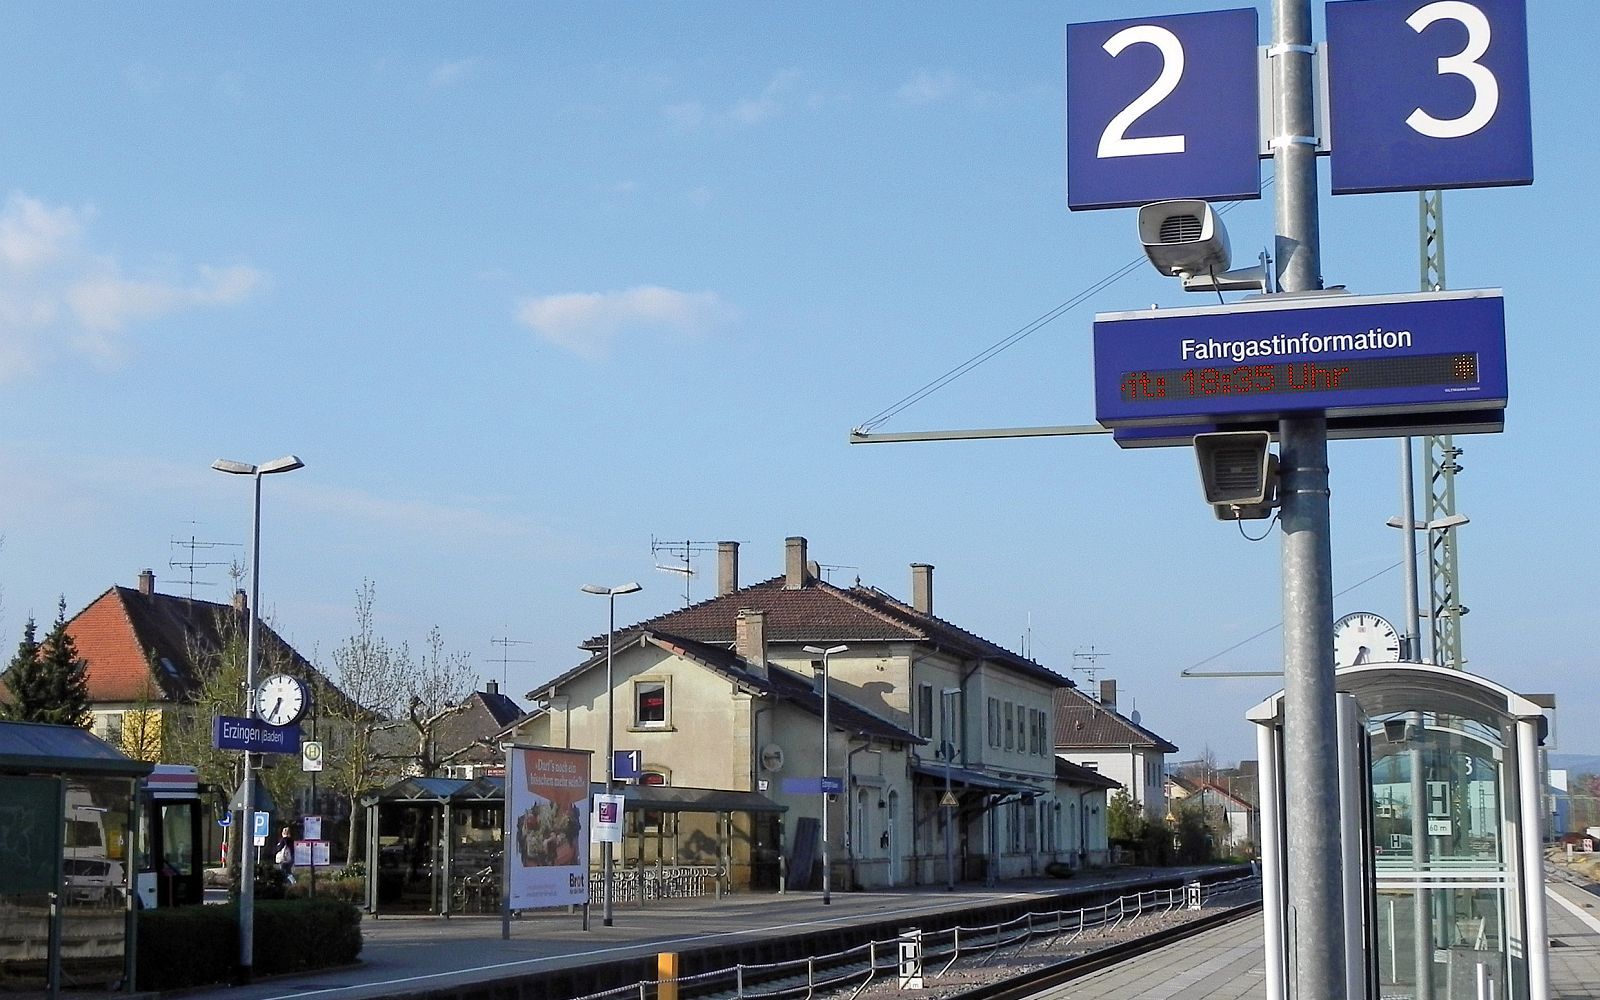  Bahnhof in Erzingen 